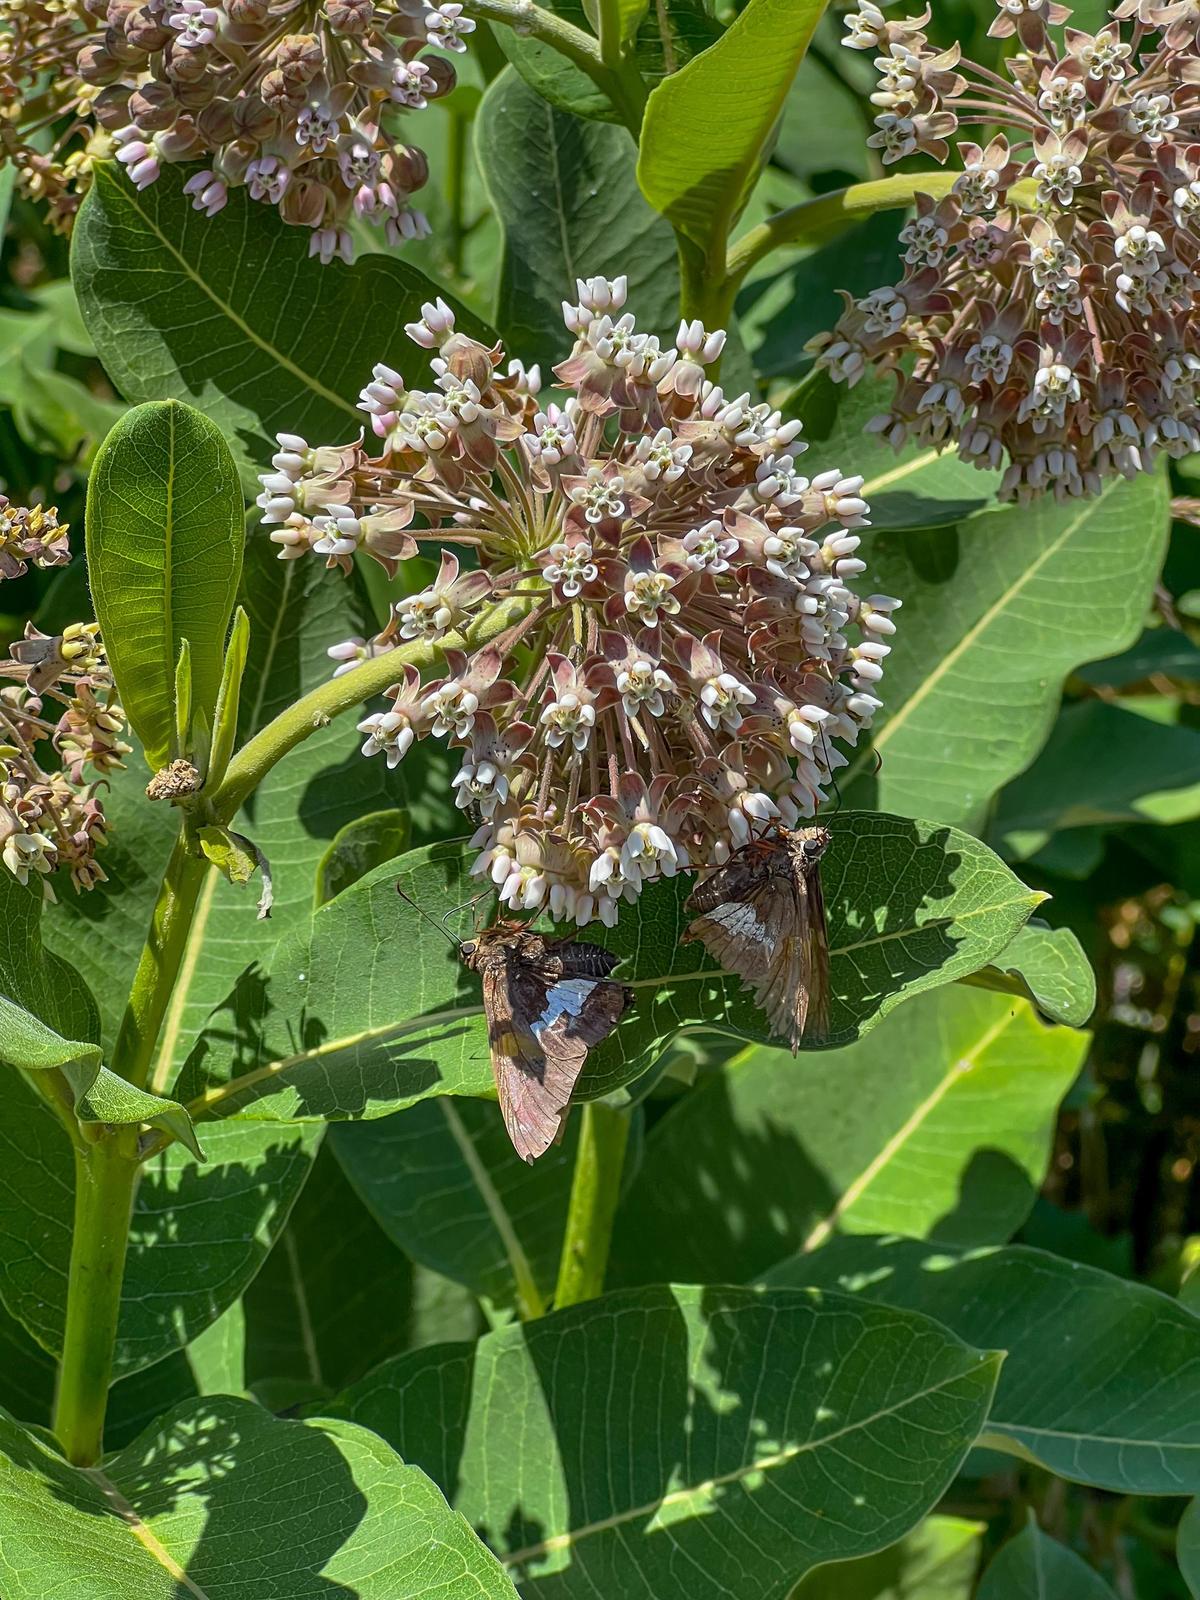 Common milkweed Photo by Ashley Bradford